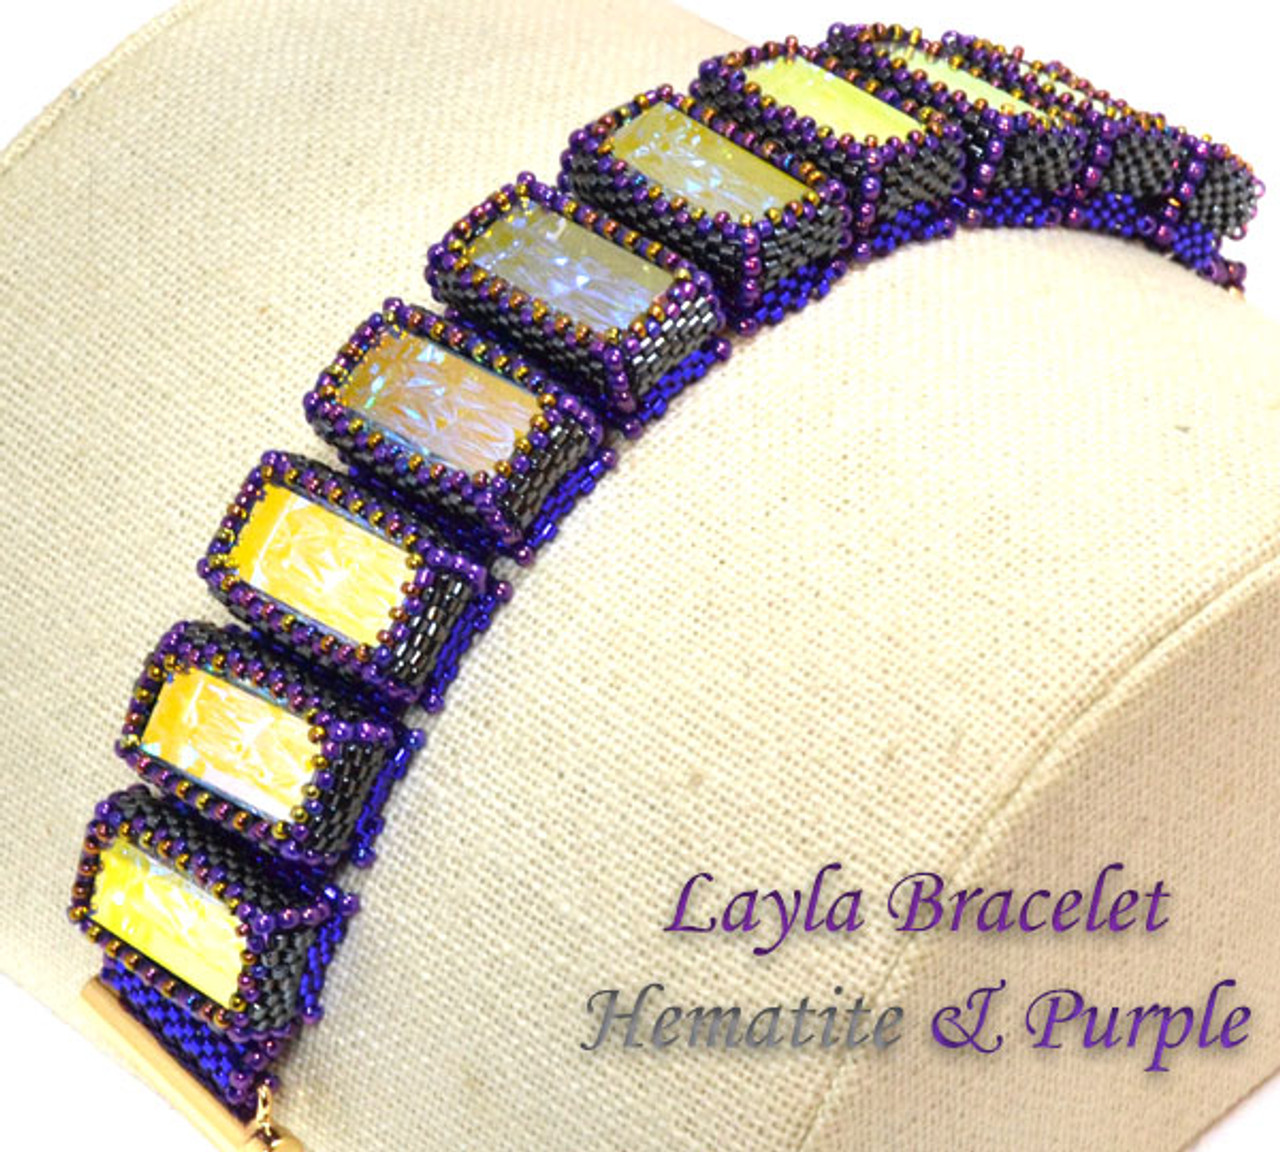 Layla Bracelet Beading Kit - Liisa Turunen Designs